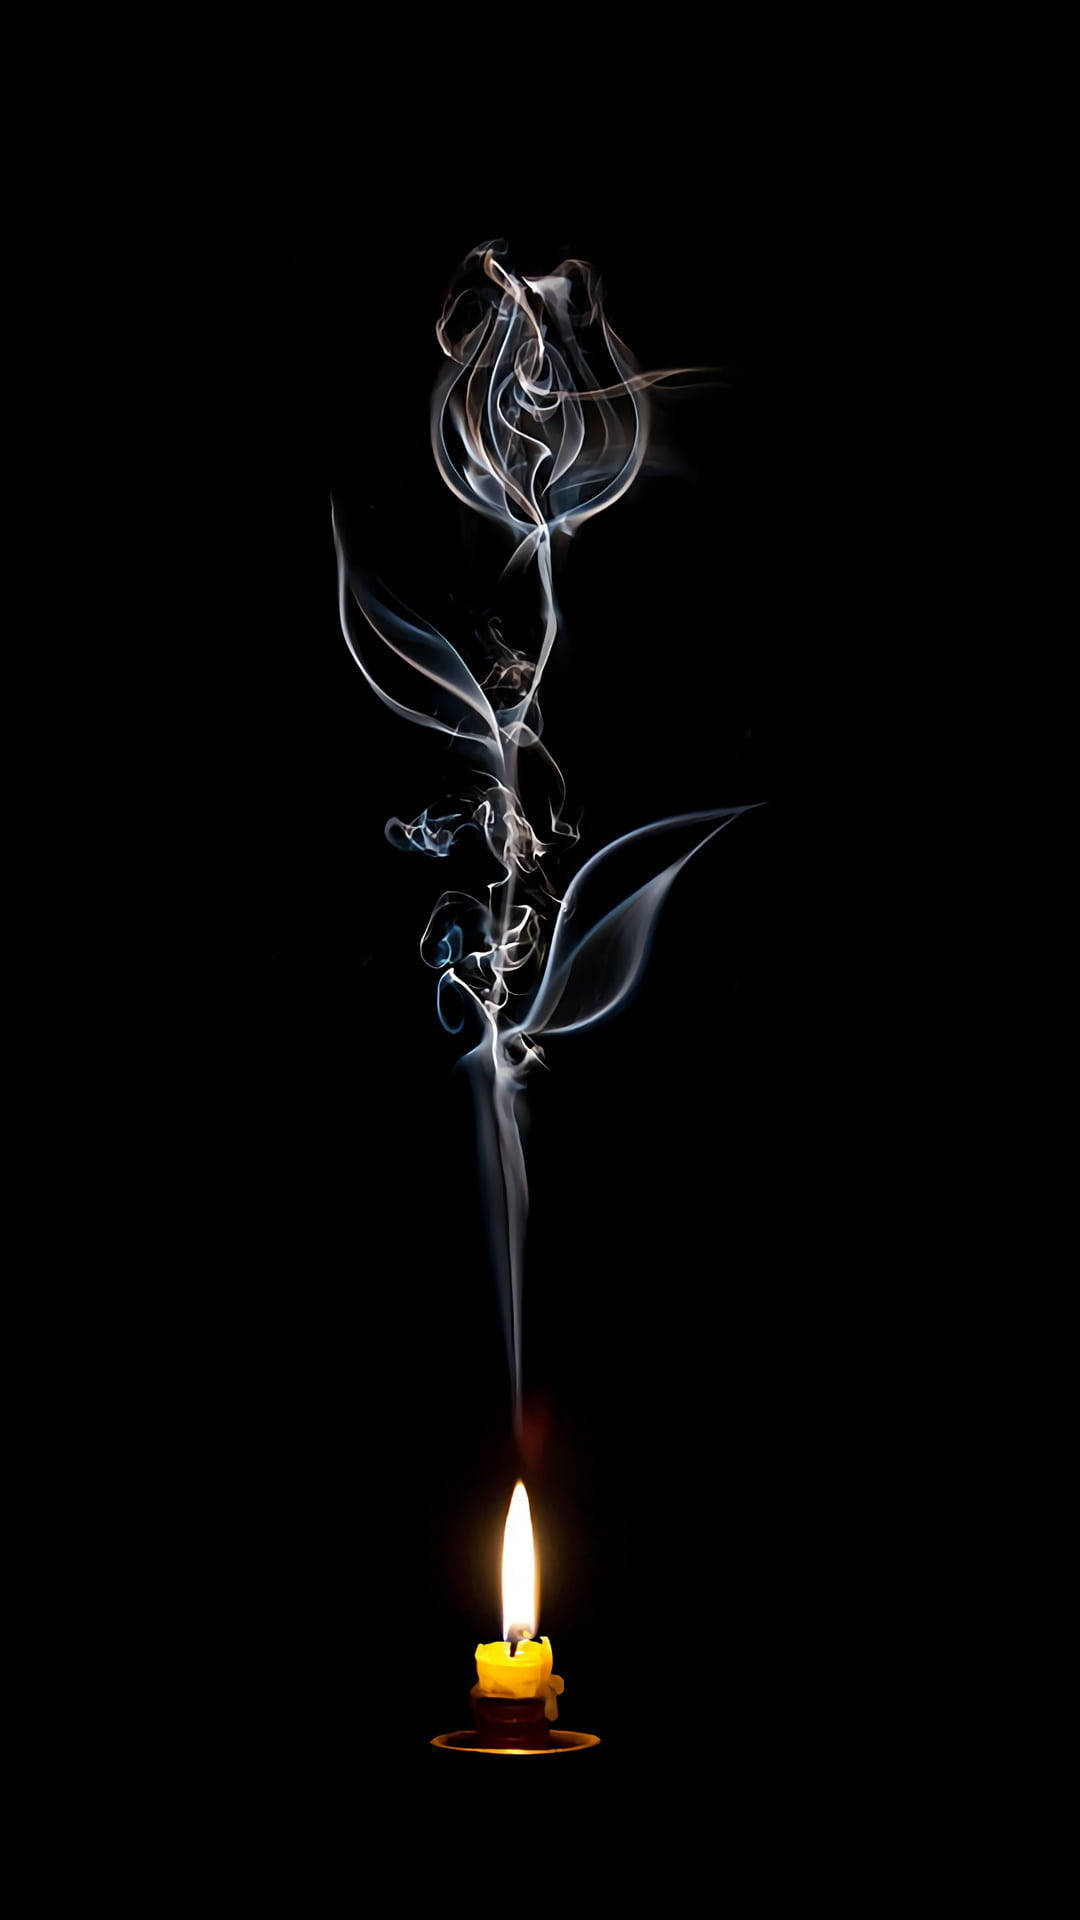 Smoke Rose Art Iphone Wallpaper